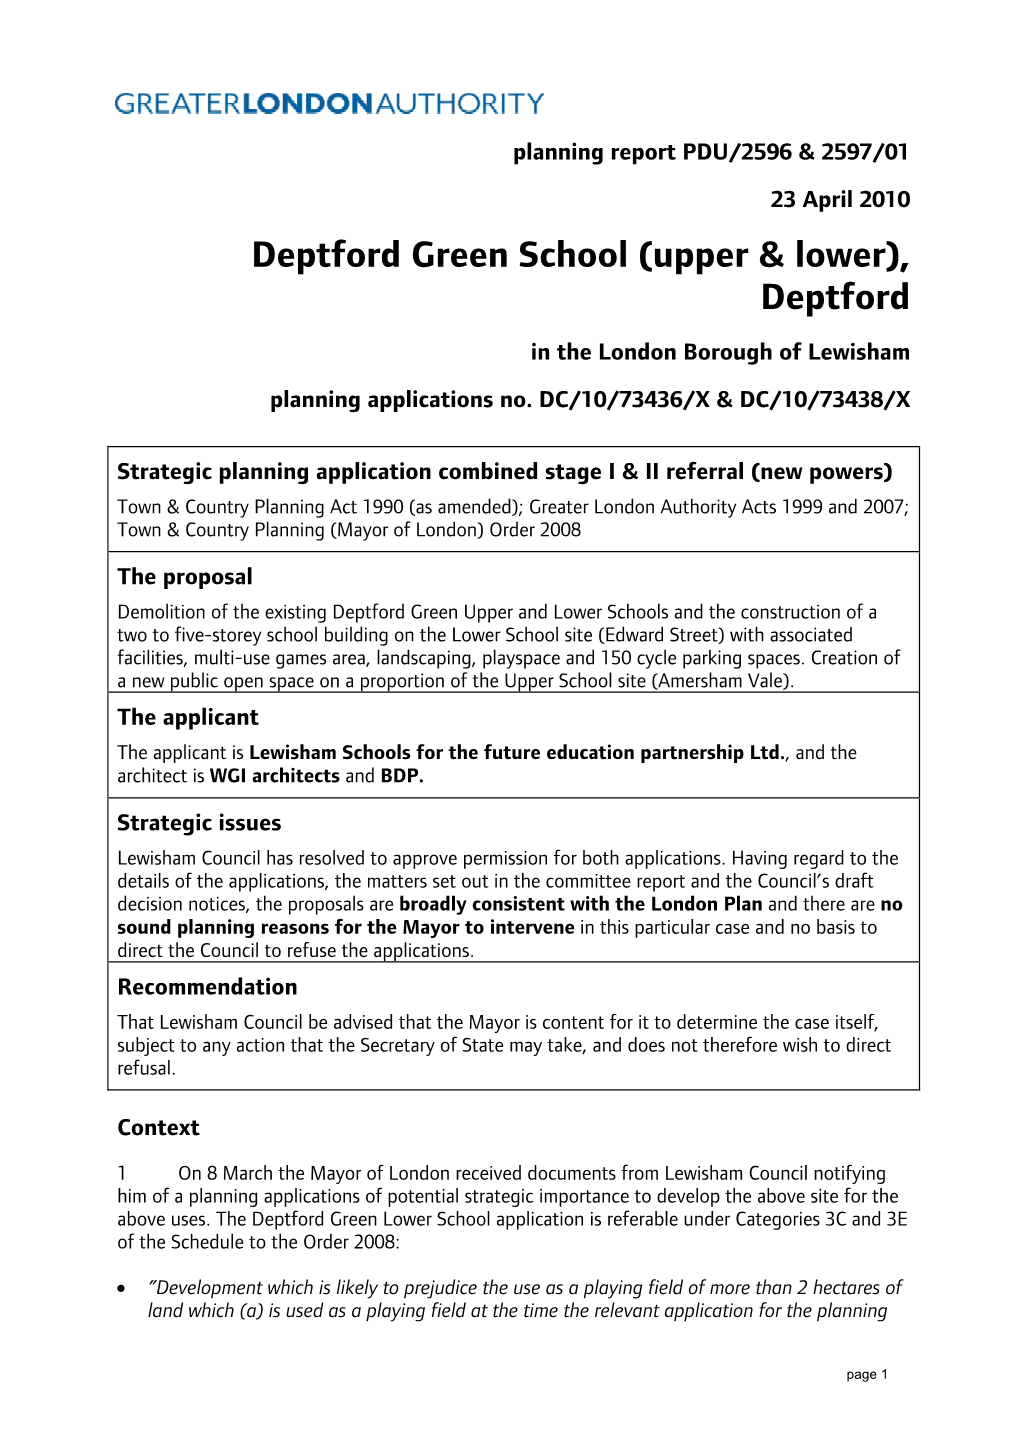 Deptford Green School (Upper & Lower), Deptford in the London Borough of Lewisham Planning Applications No